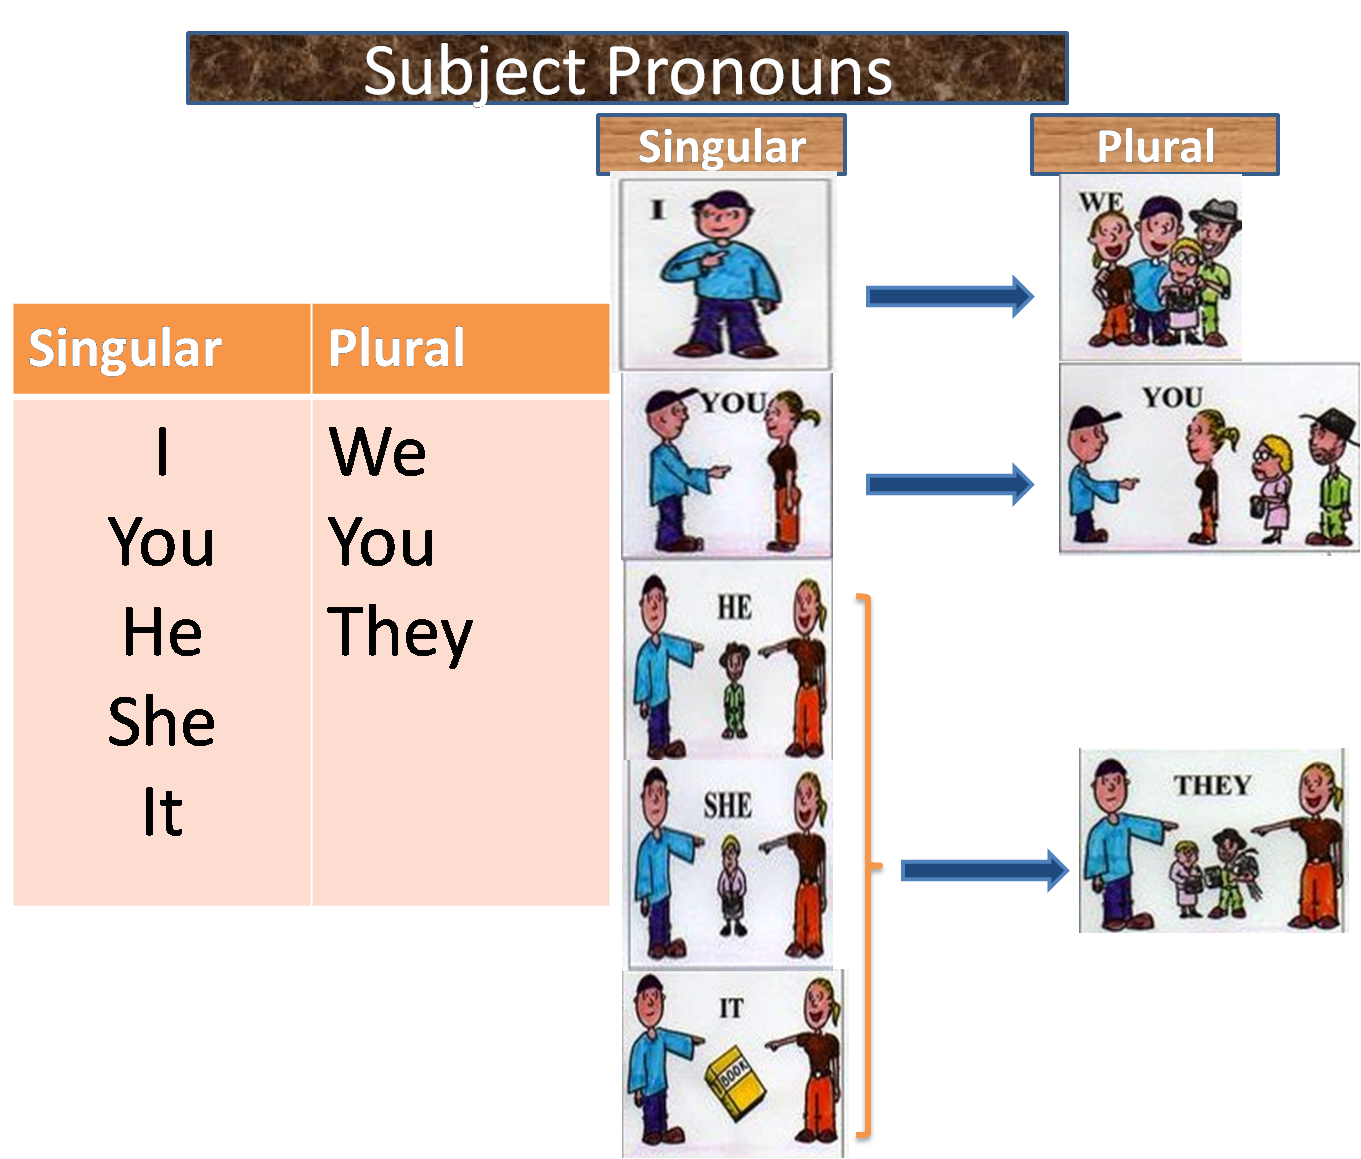 Personal pronouns таблица. Subject pronouns в английском языке. Subject pronouns правило. Упражнения на тему subject pronouns.